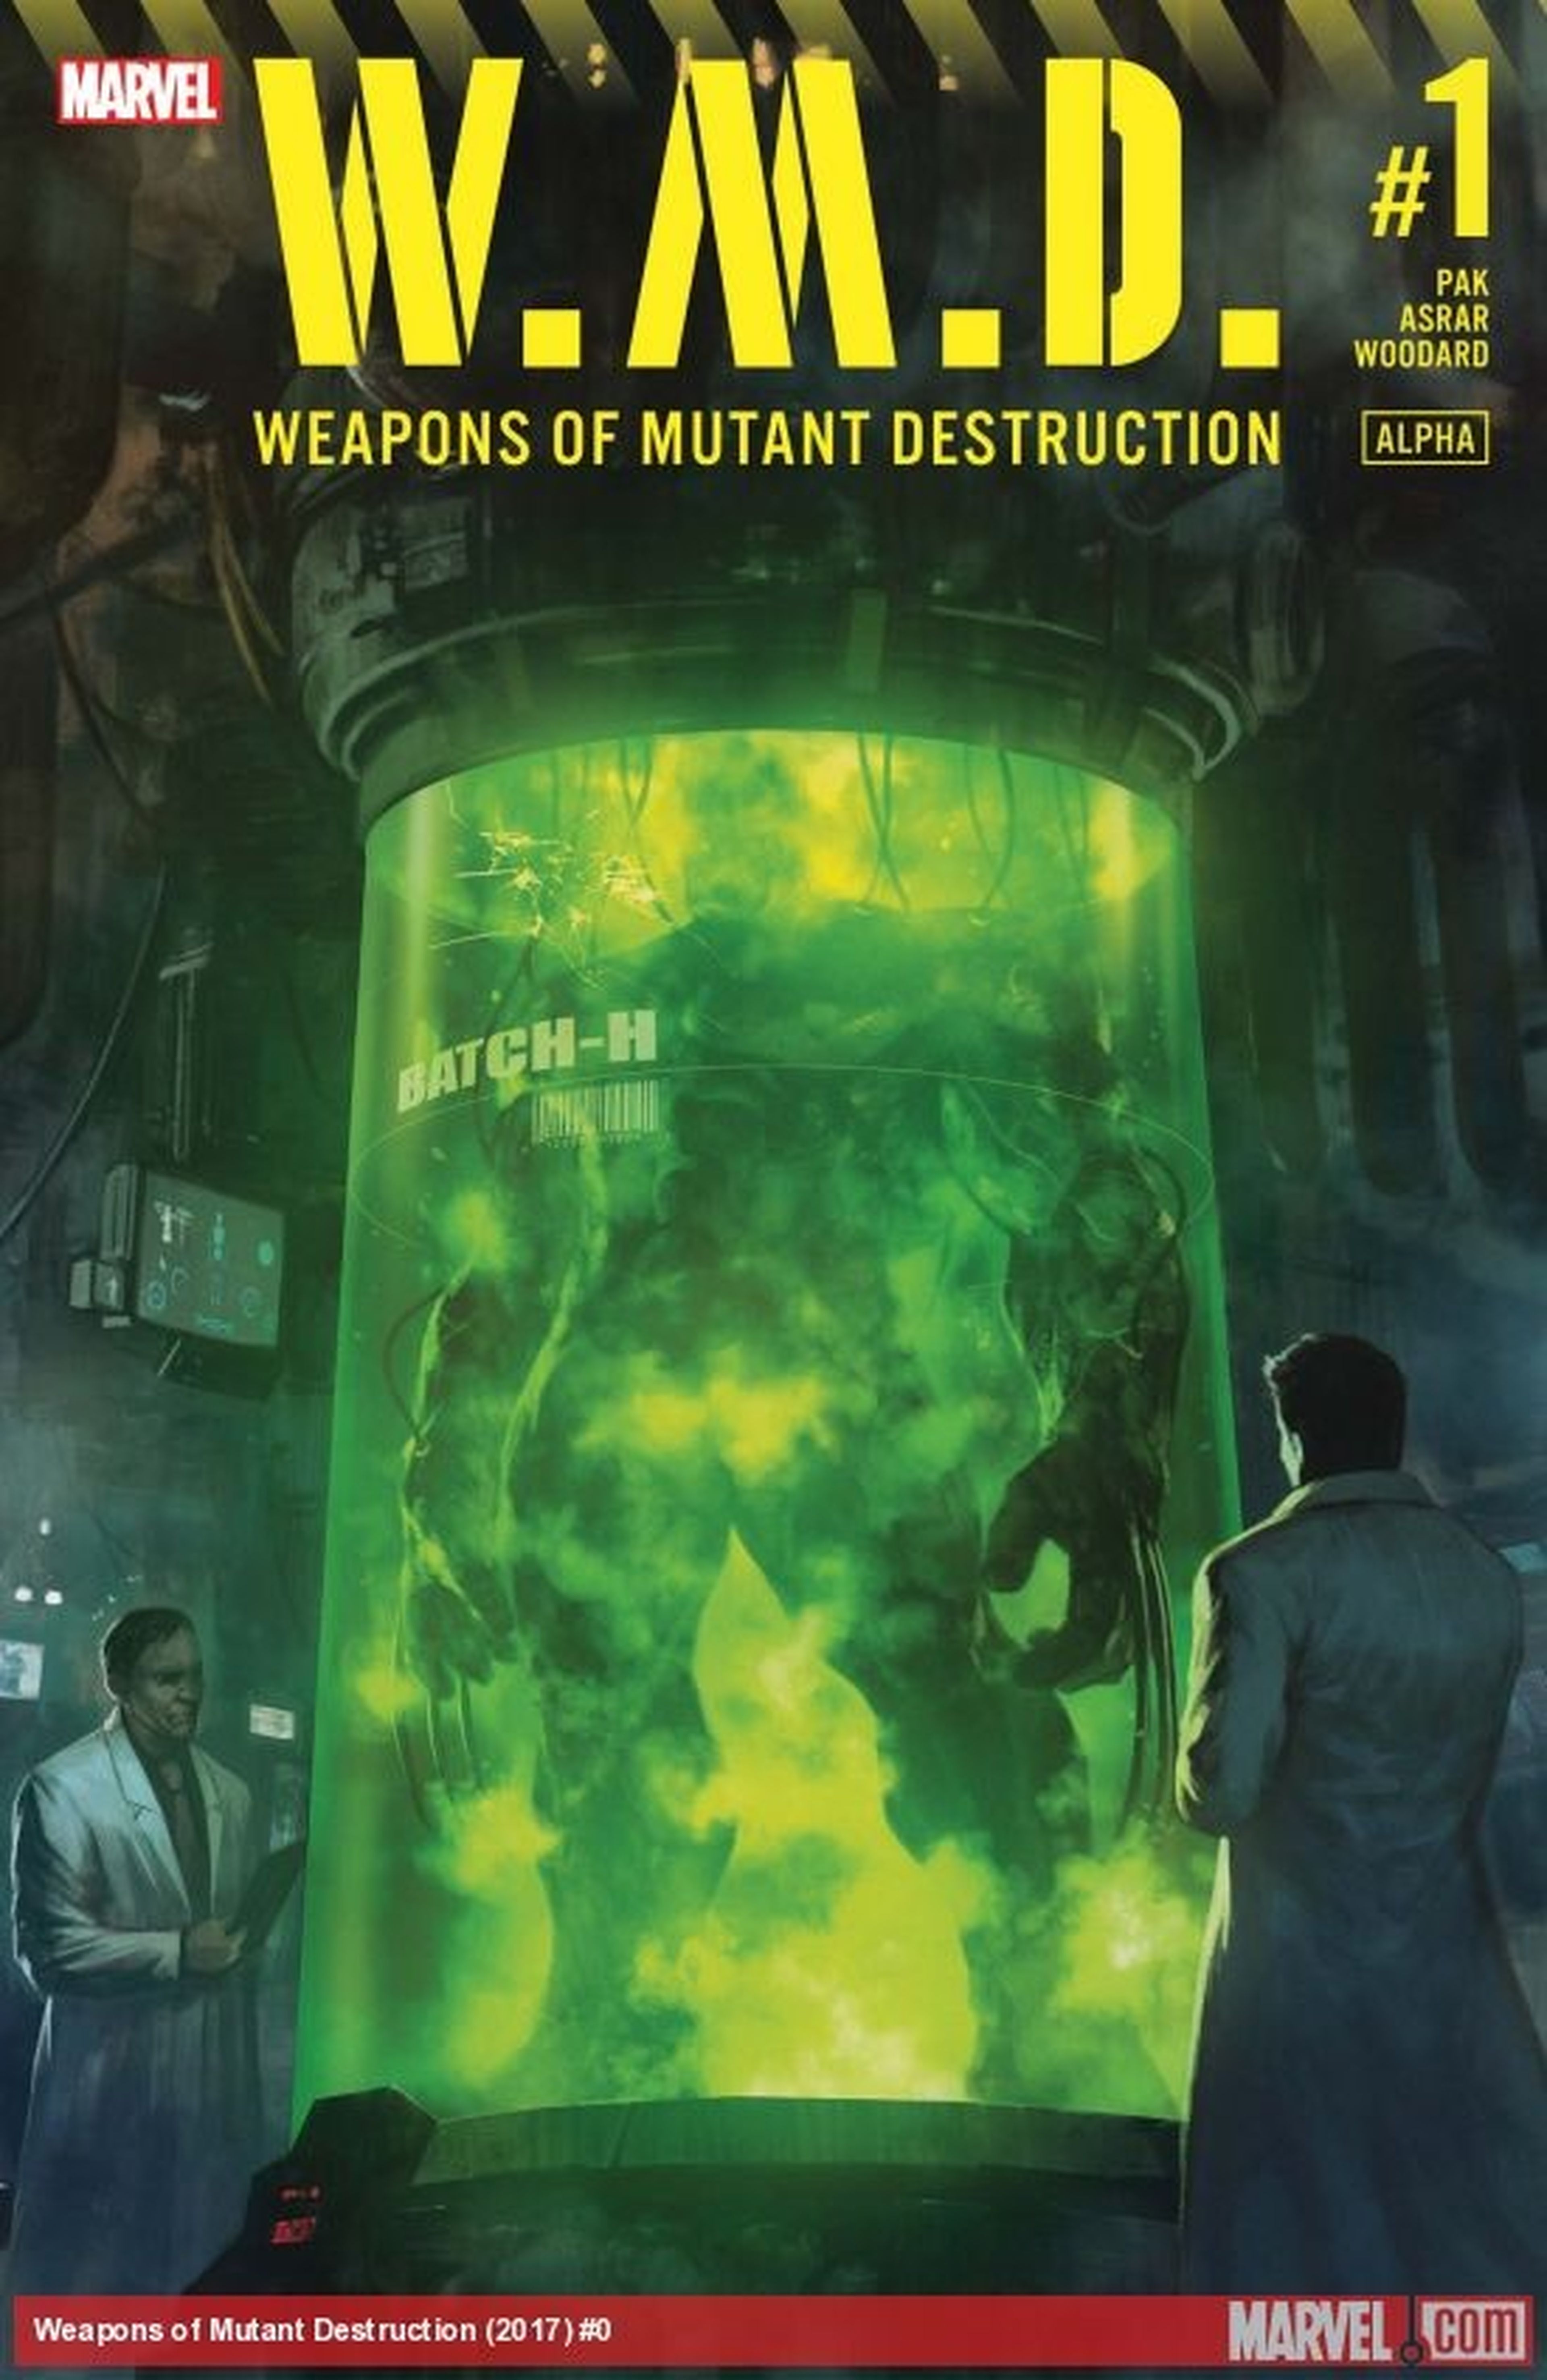 Weapons of mutant destruction - Híbrido de Hulk y Lobezno